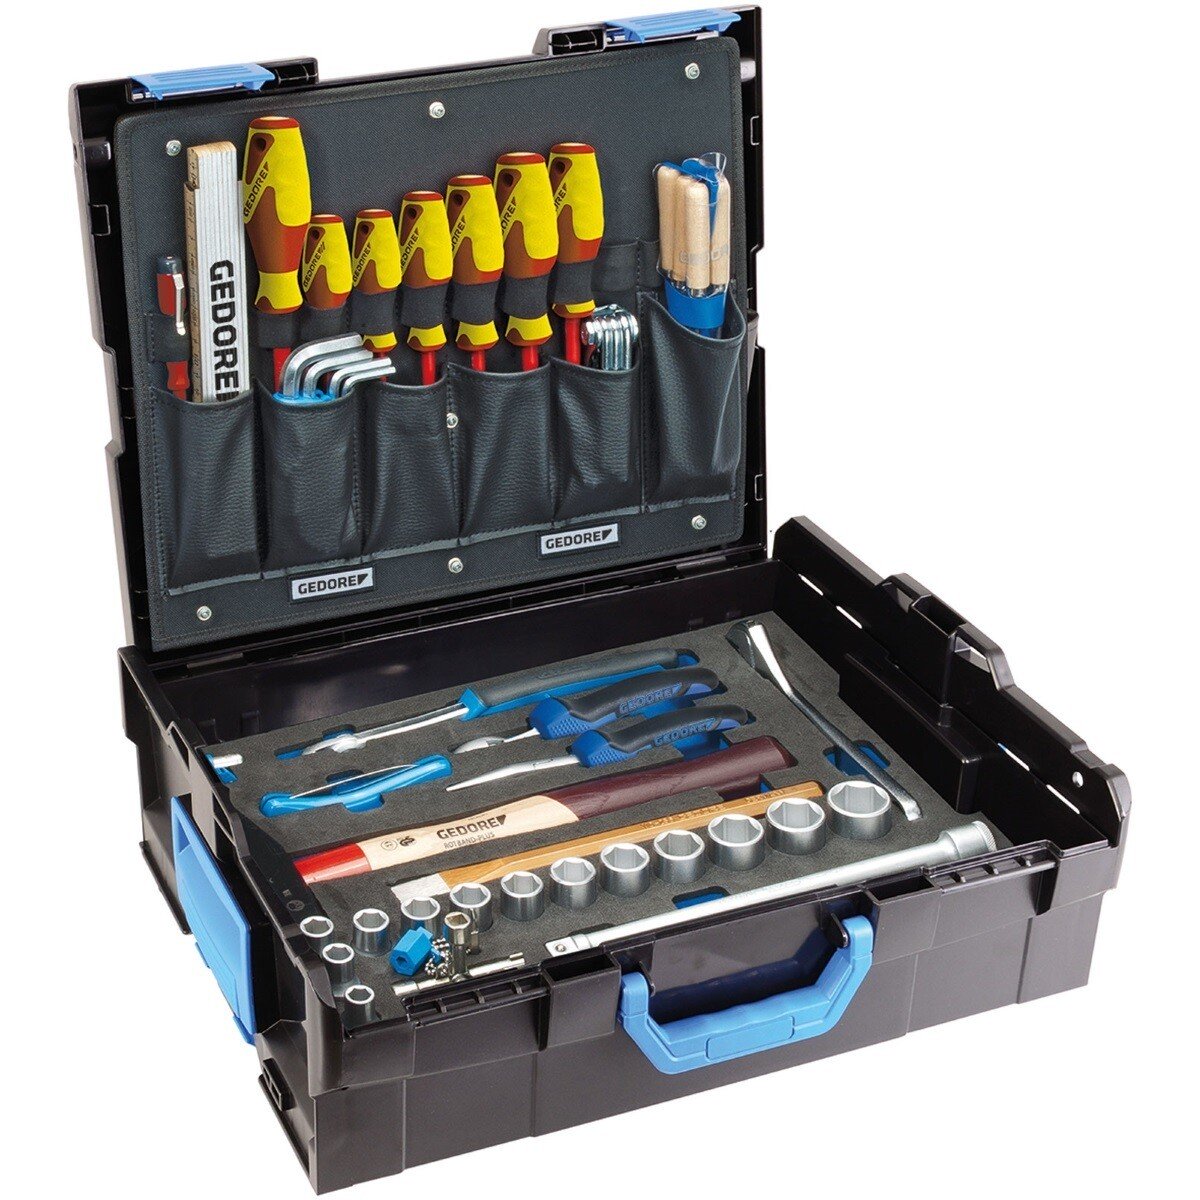 Gedore 2658194 58 Piece Sortimo Mechanics Tool Kit and L-Boxx 1100-01